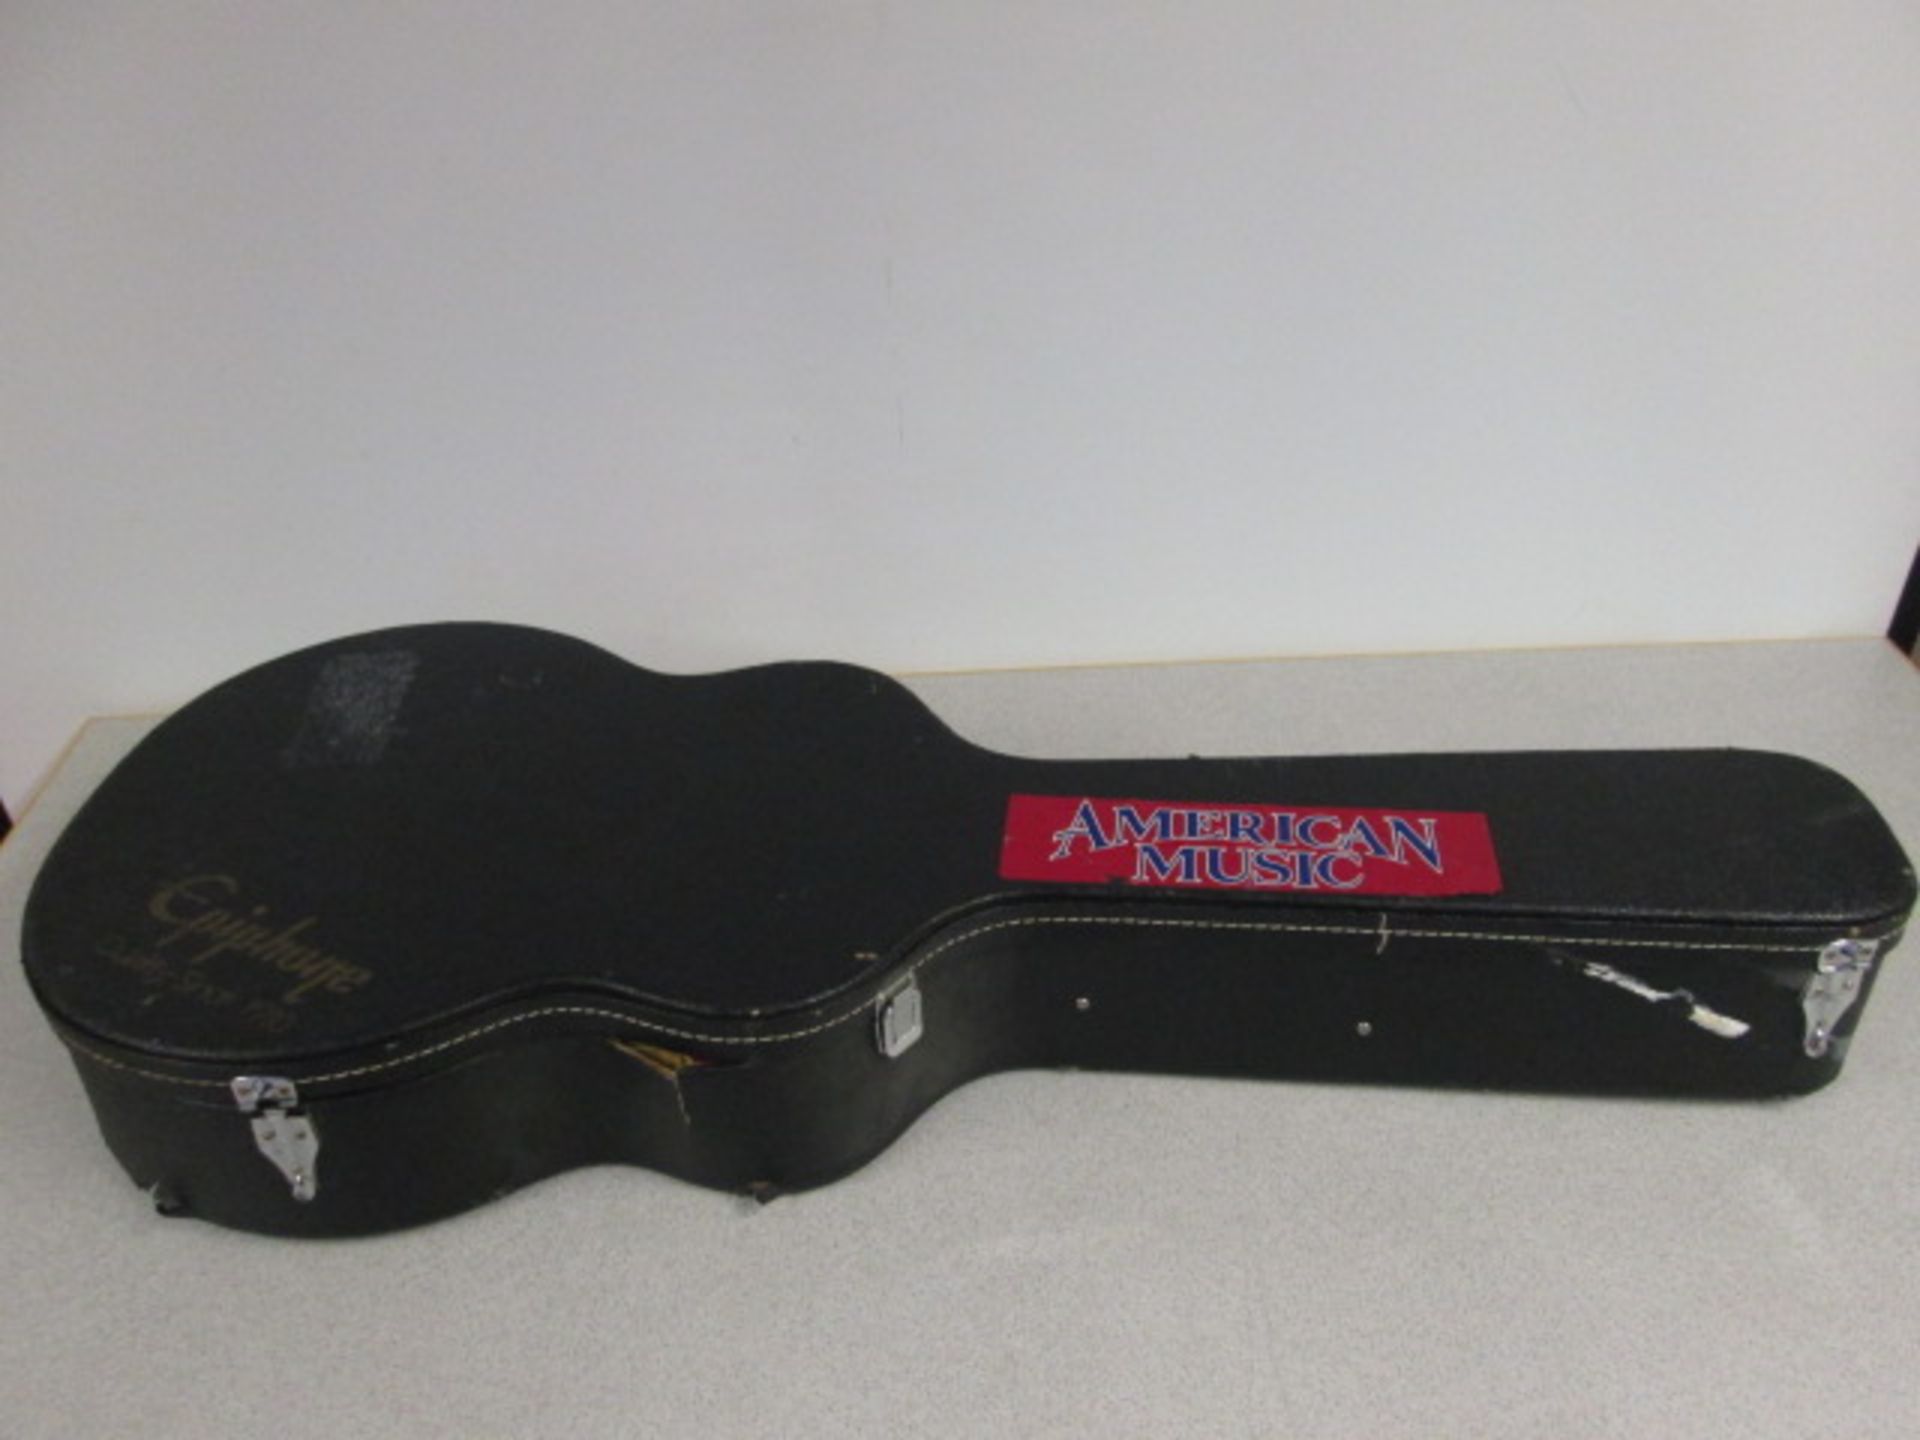 Epiphone Joe Pass Acoustic Guitar - Image 9 of 10